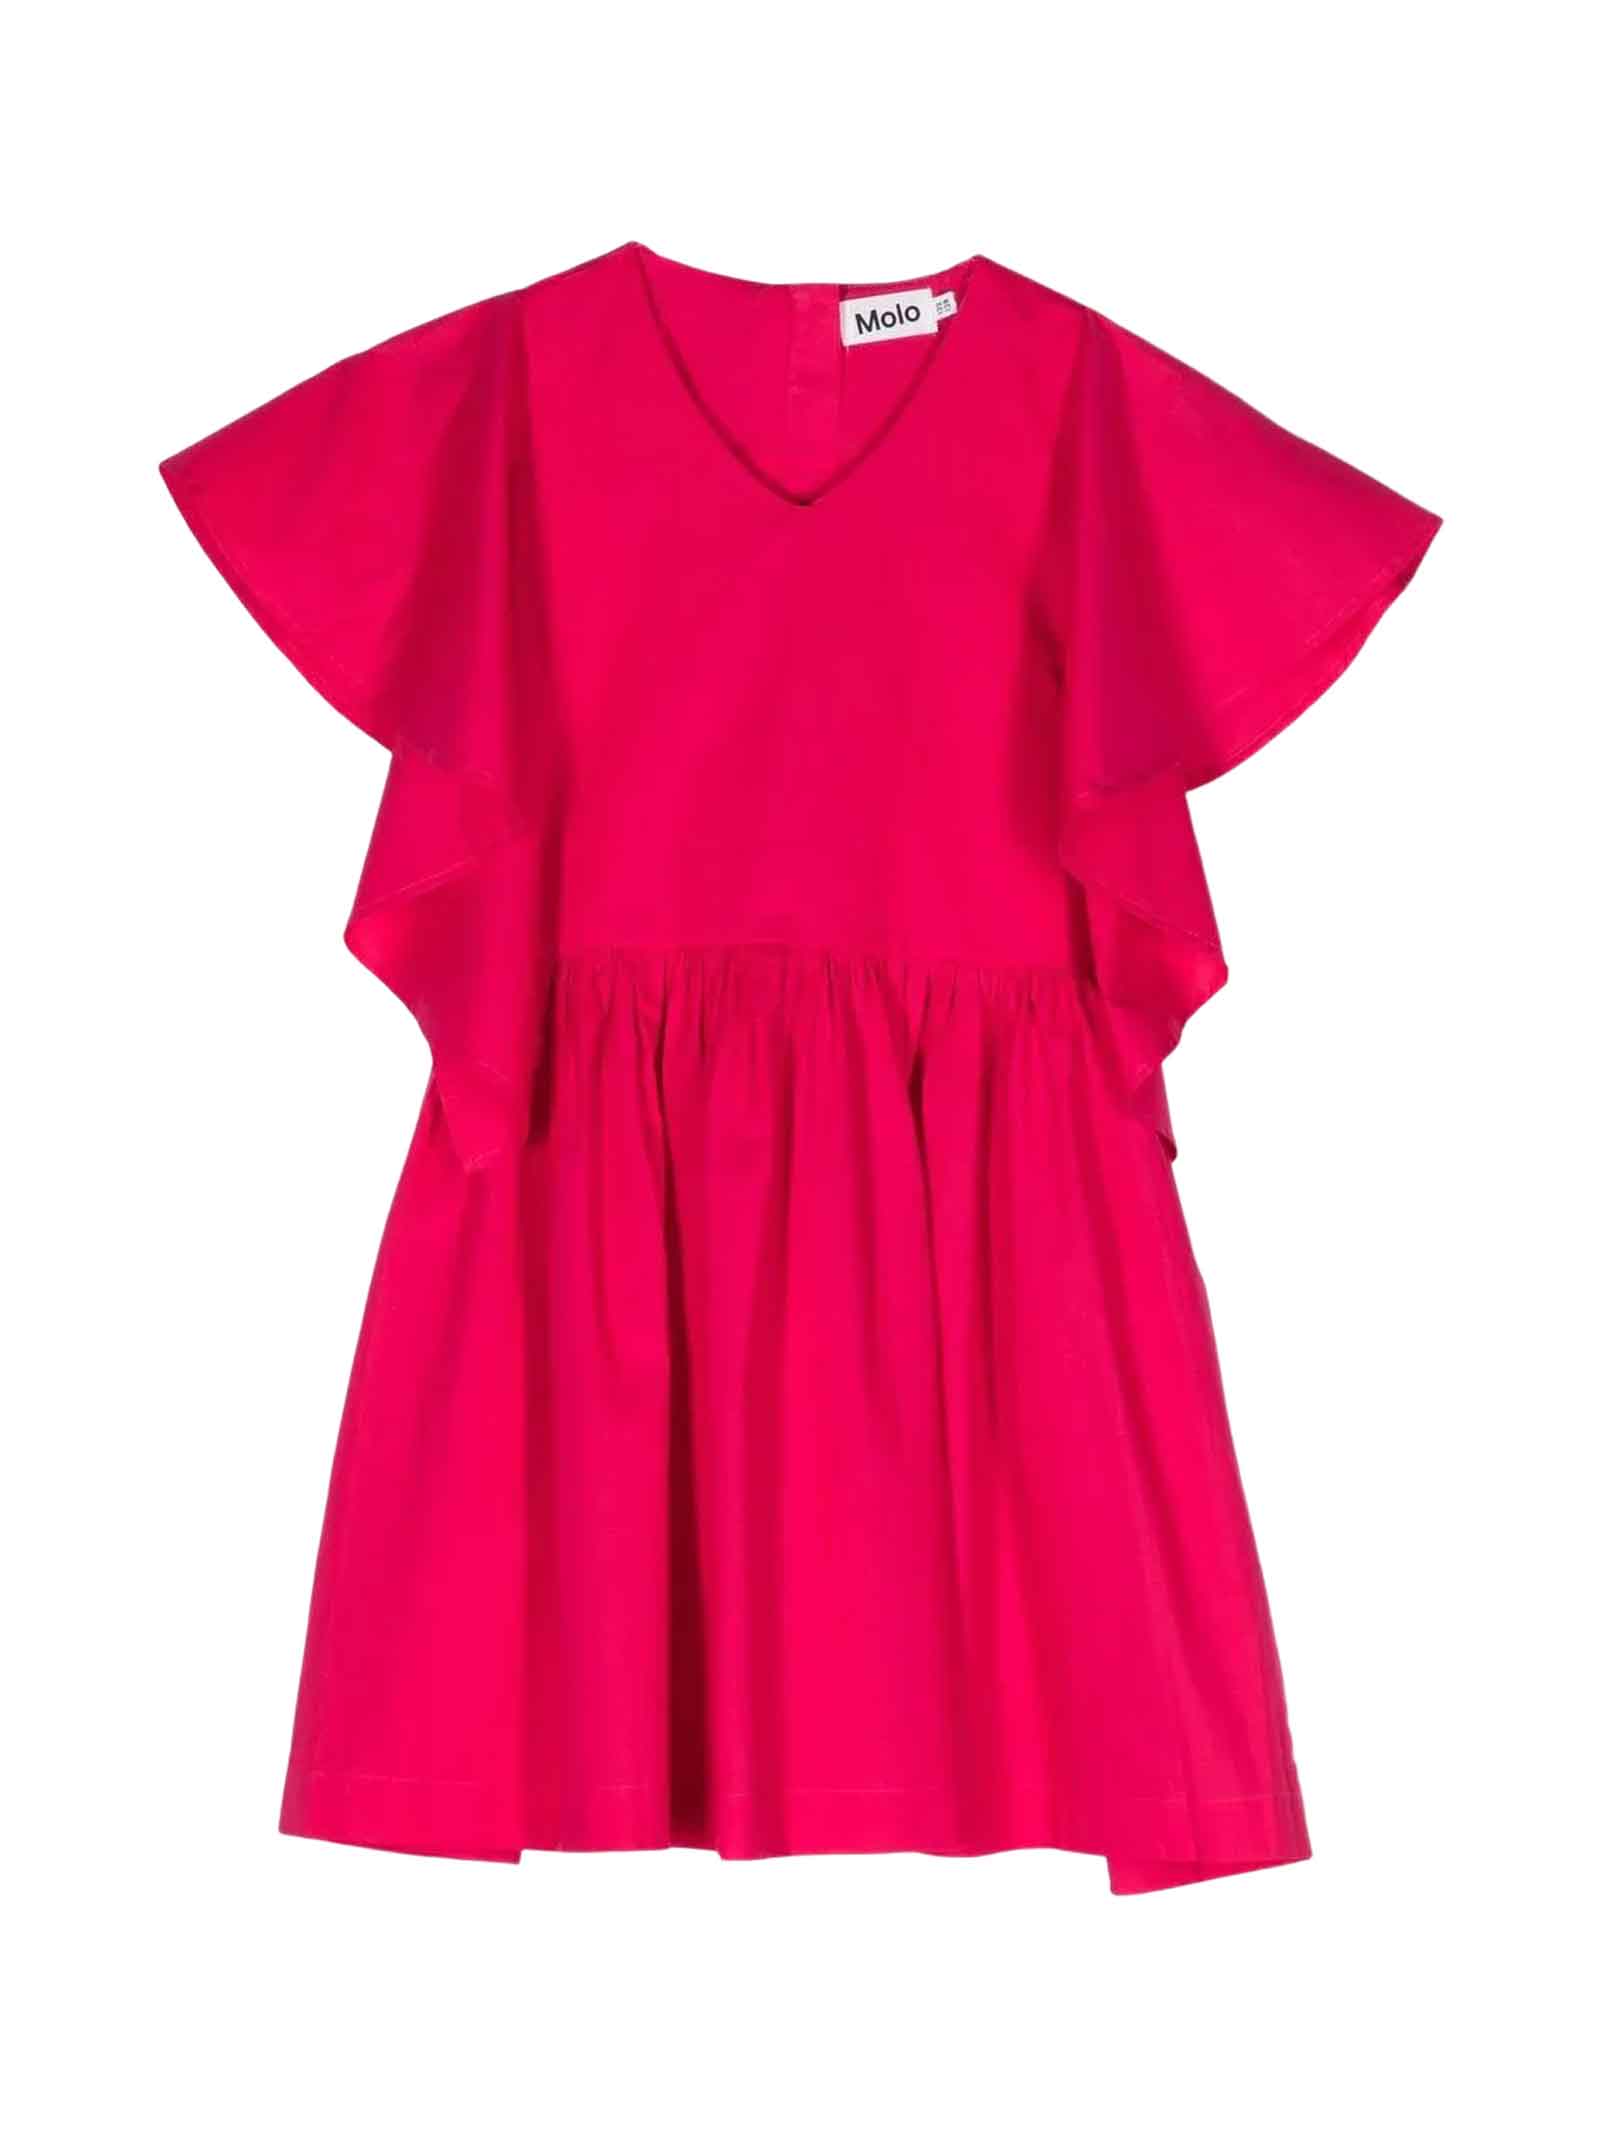 Molo Pink Dress Girl Kids. In Rosa